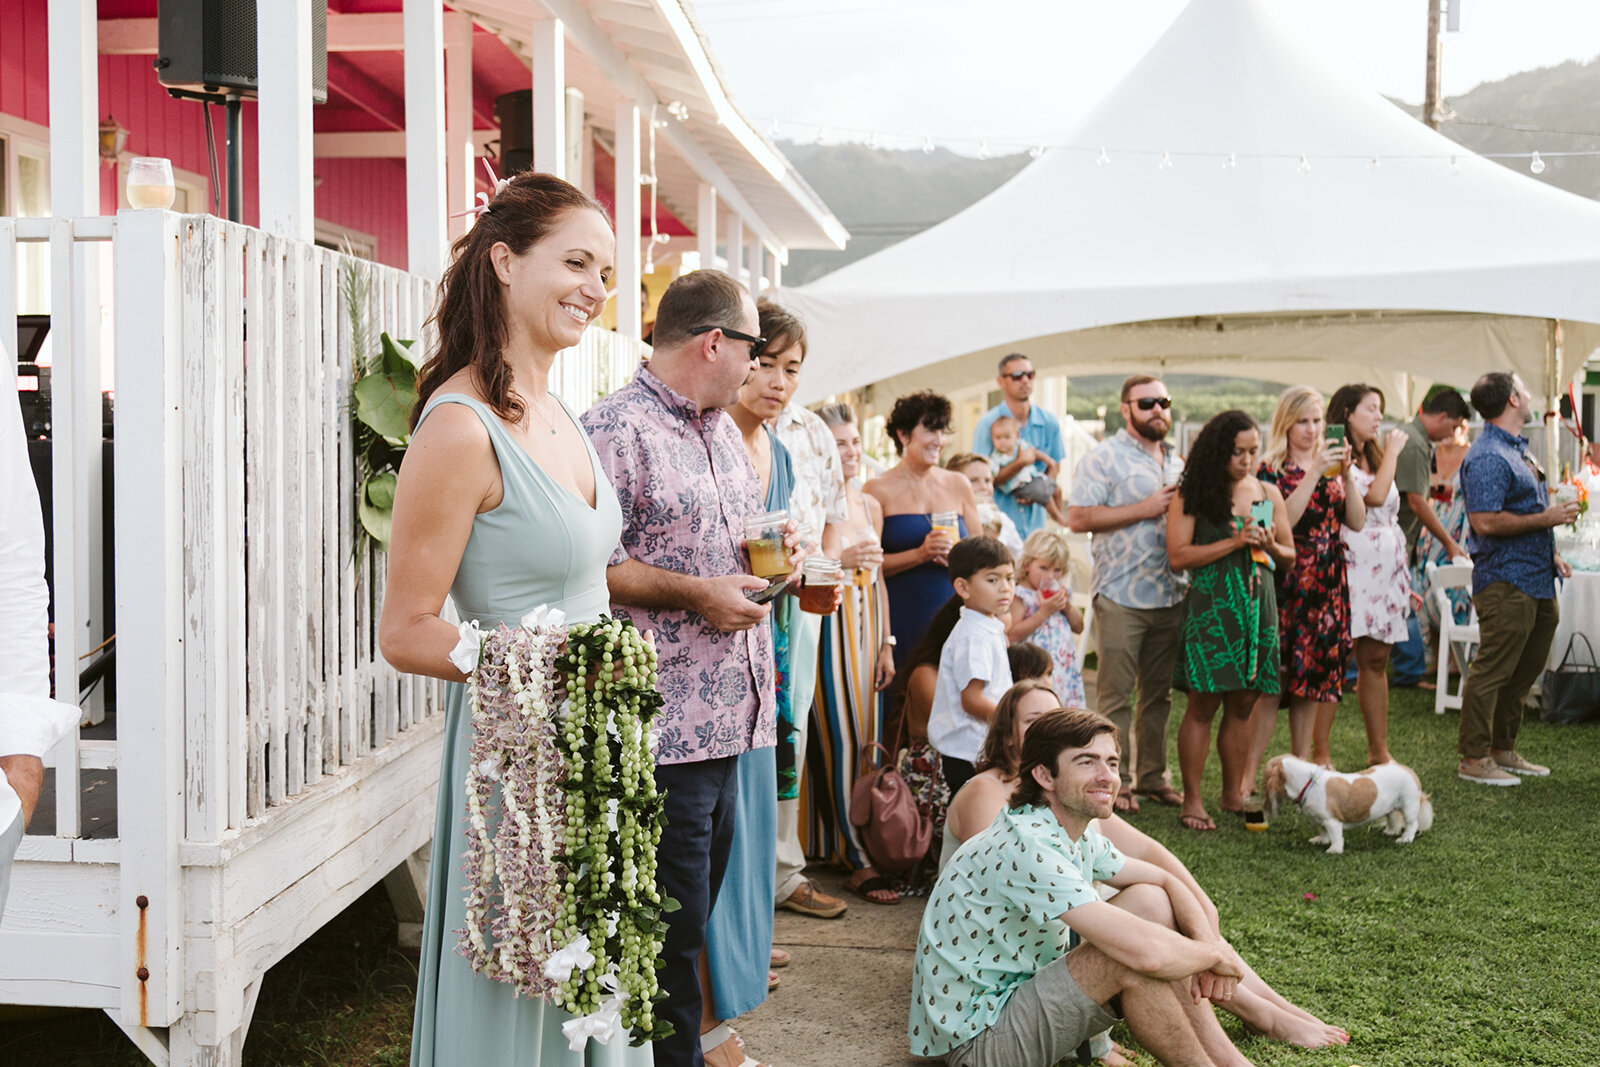 Mokuleia-North-Shore-Hawaii-Beach-House-Wedding-ceremony-grass-lawn